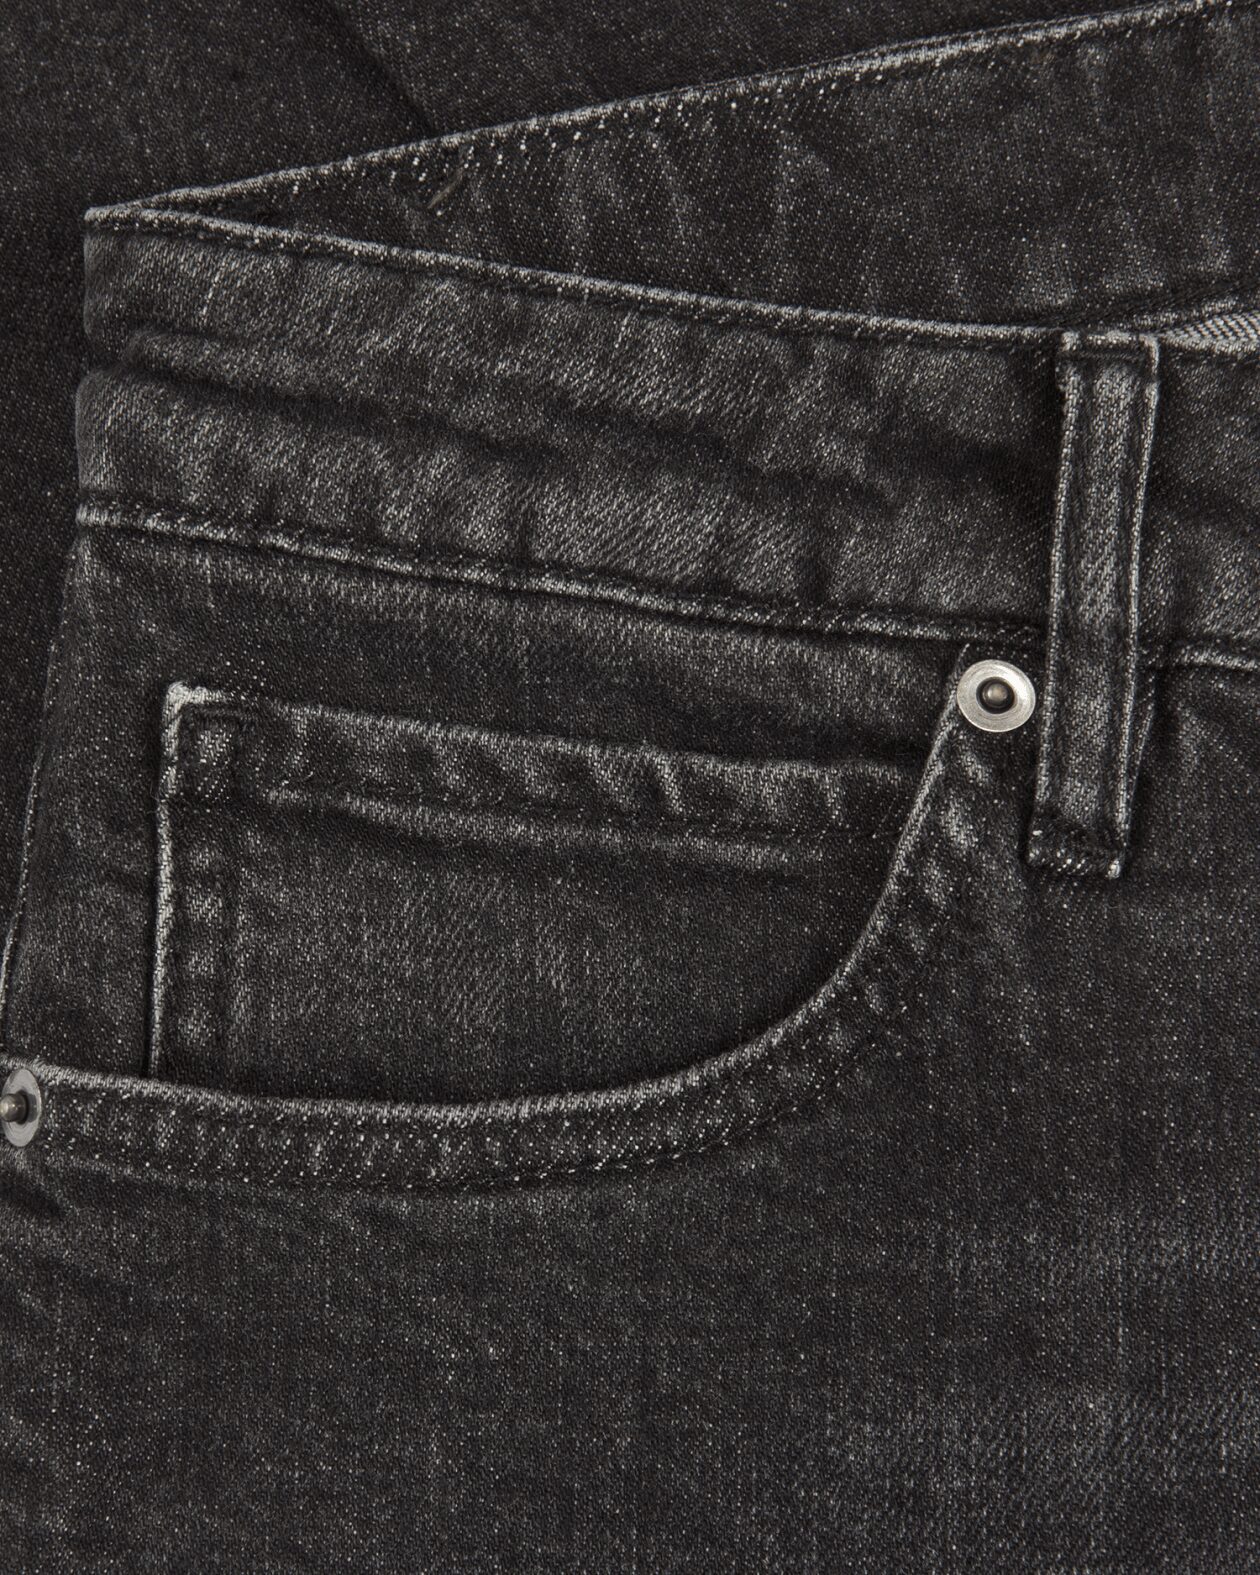 Jeans Black Wash